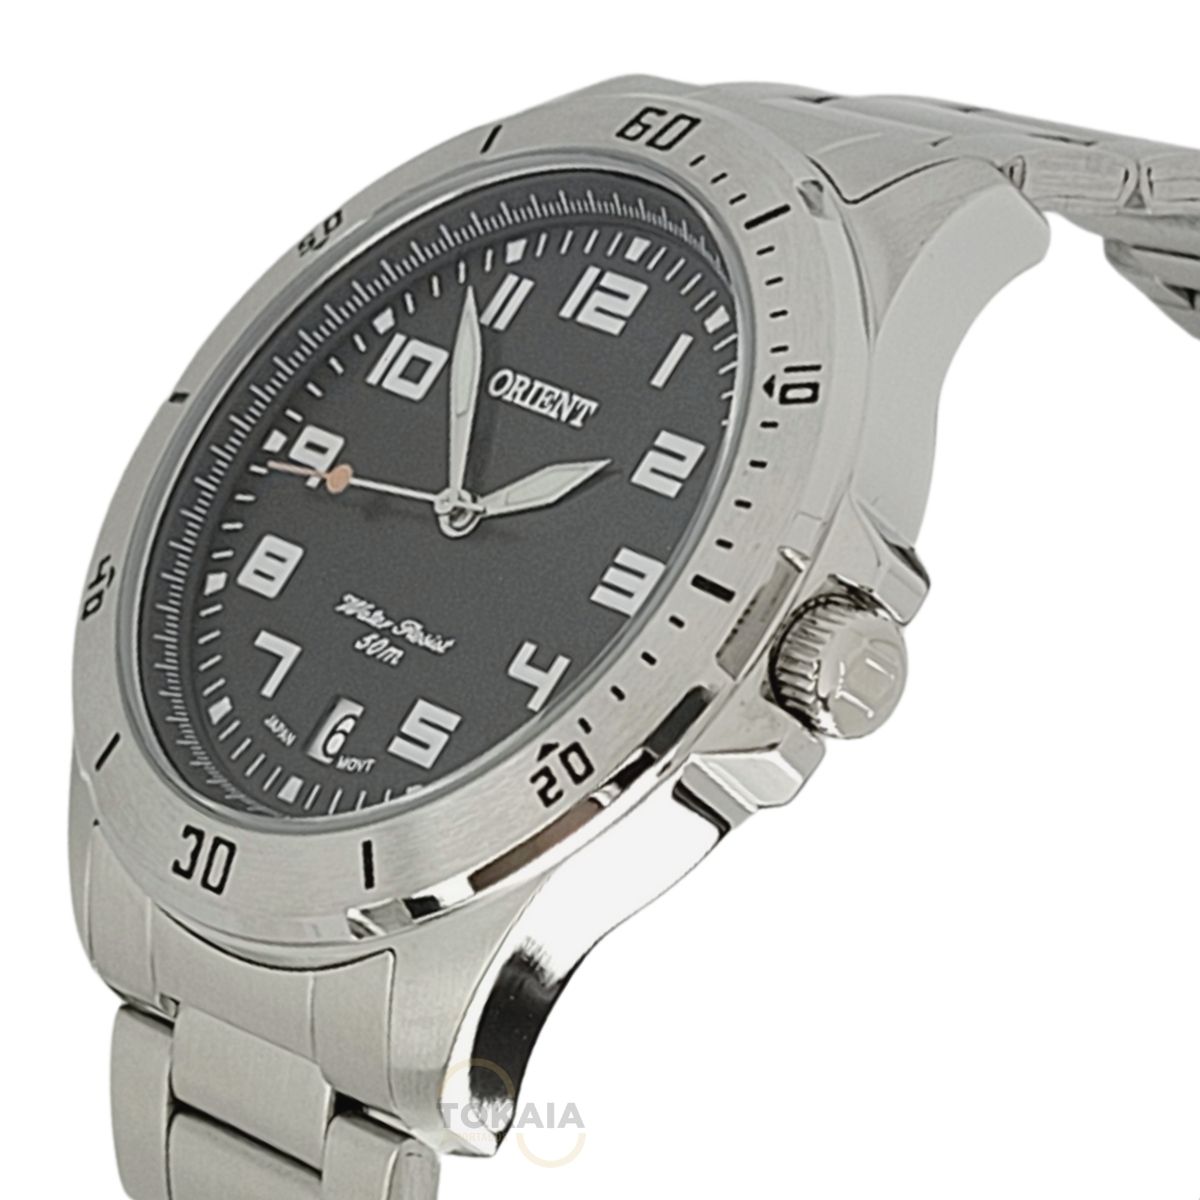 Relógio Orient Masculino Analógico Prata MBSS1155A P2SX